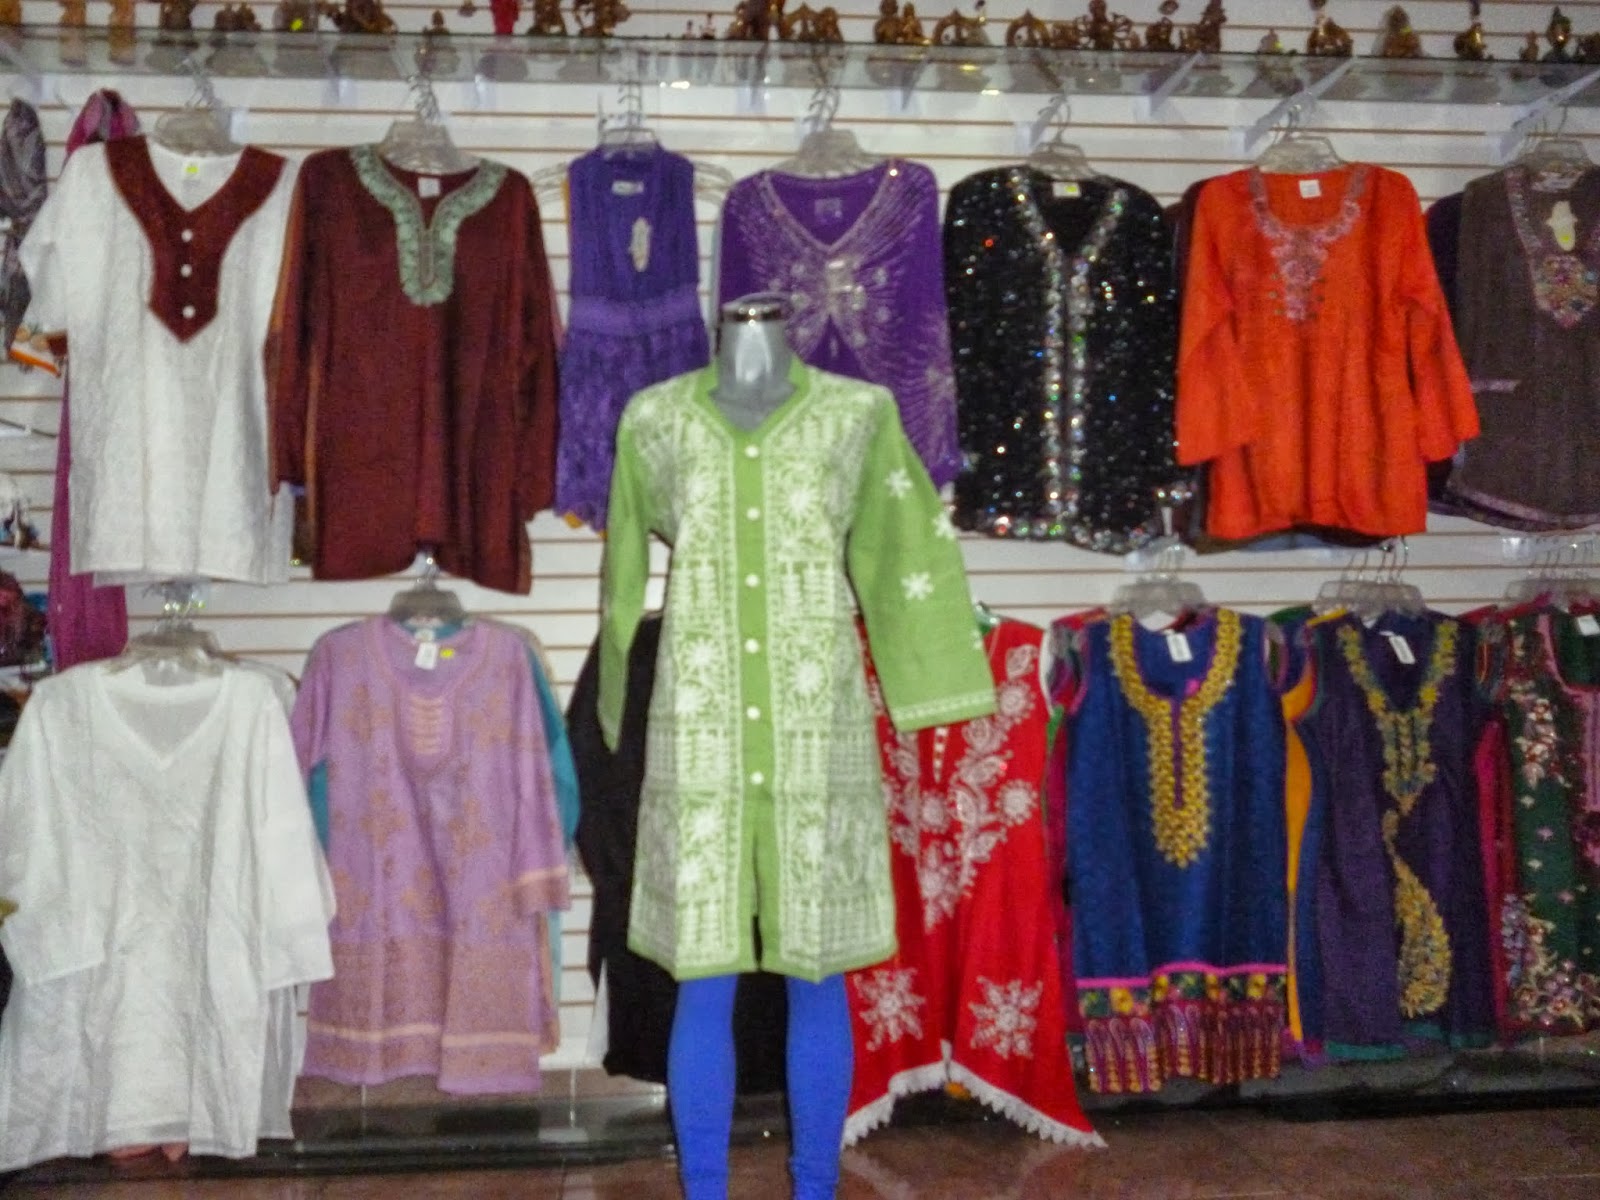 FASHION OF INDIA: Ropa y Artesania hindu, bellydance articulos, blusas